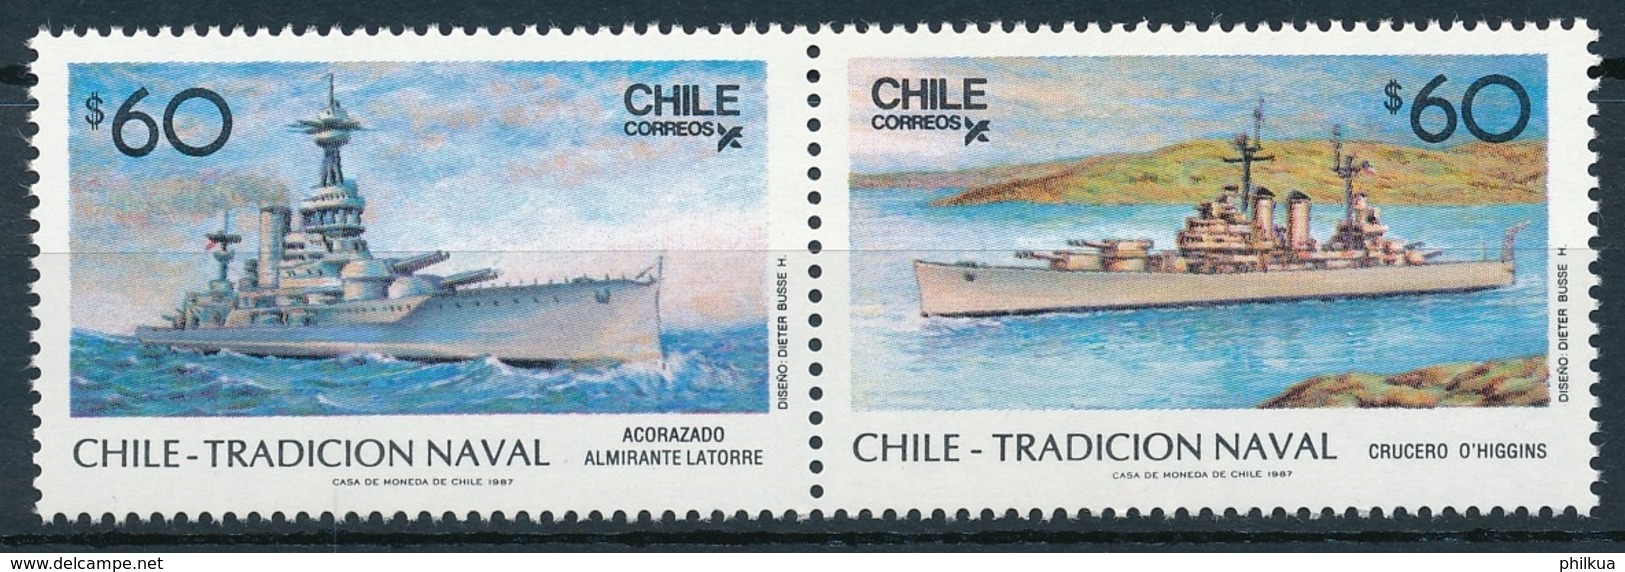 Chile - Postfrisch/** - Schiffe, Seefahrt, Segelschiffe, Etc. / Ships, Seafaring, Sailing Ships - Schiffahrt